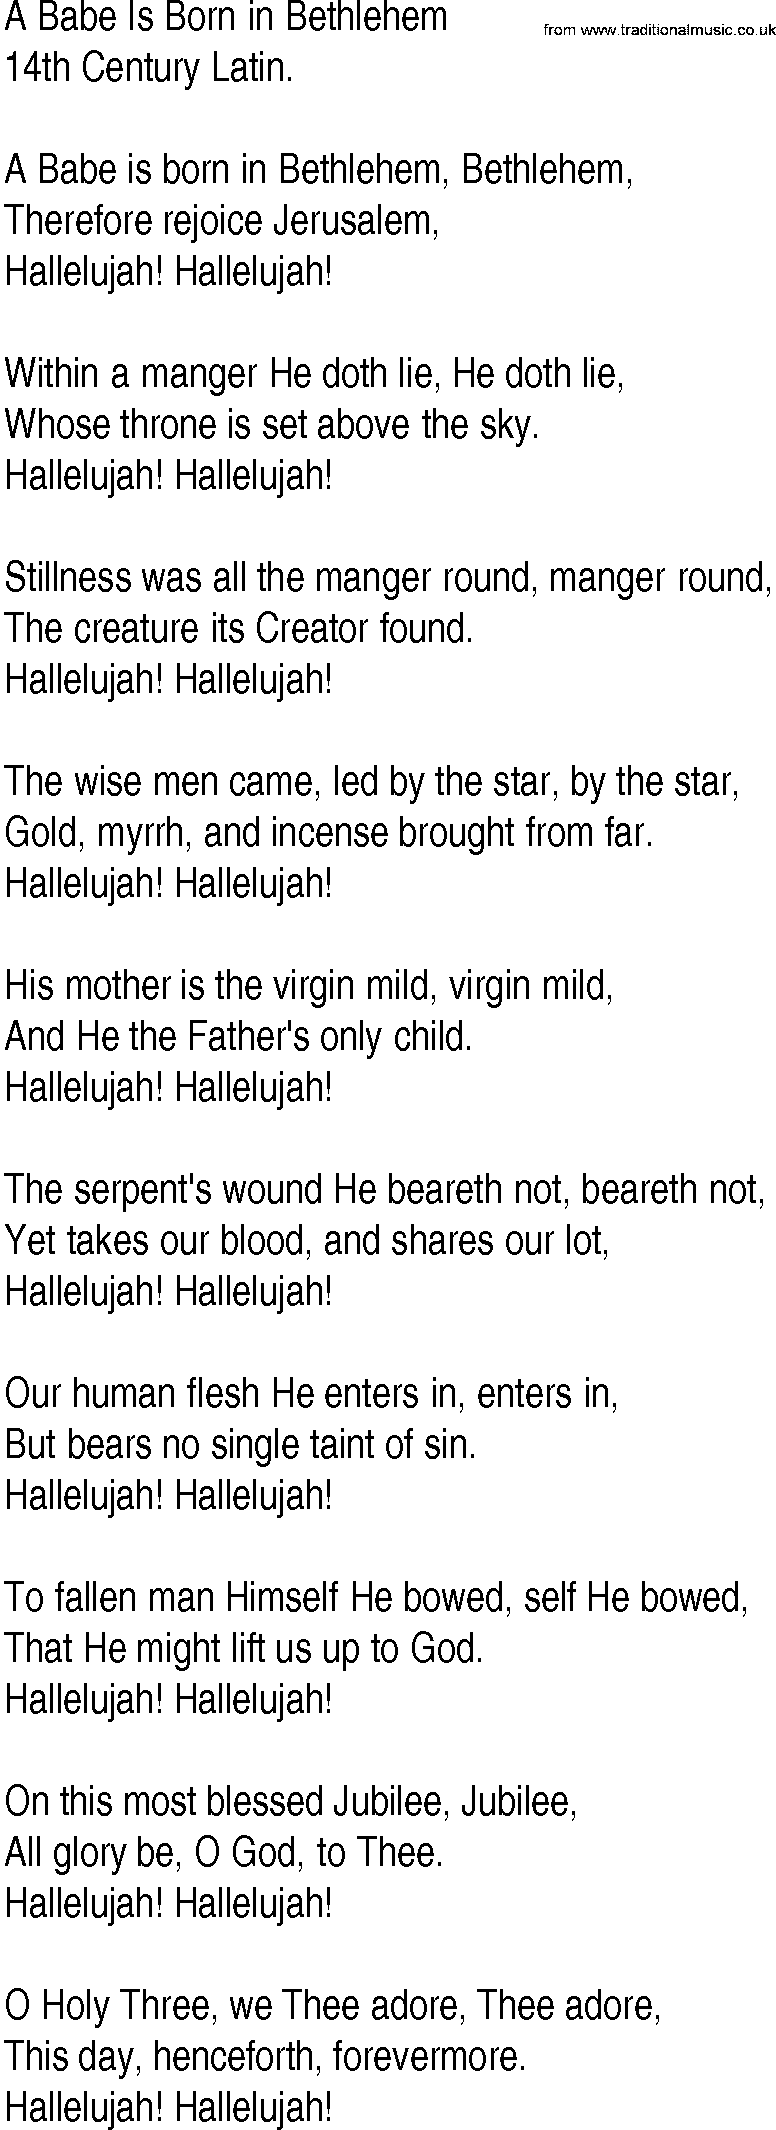 Hymn and Gospel Song: A Babe Is Born in Bethlehem by th Century Latin lyrics